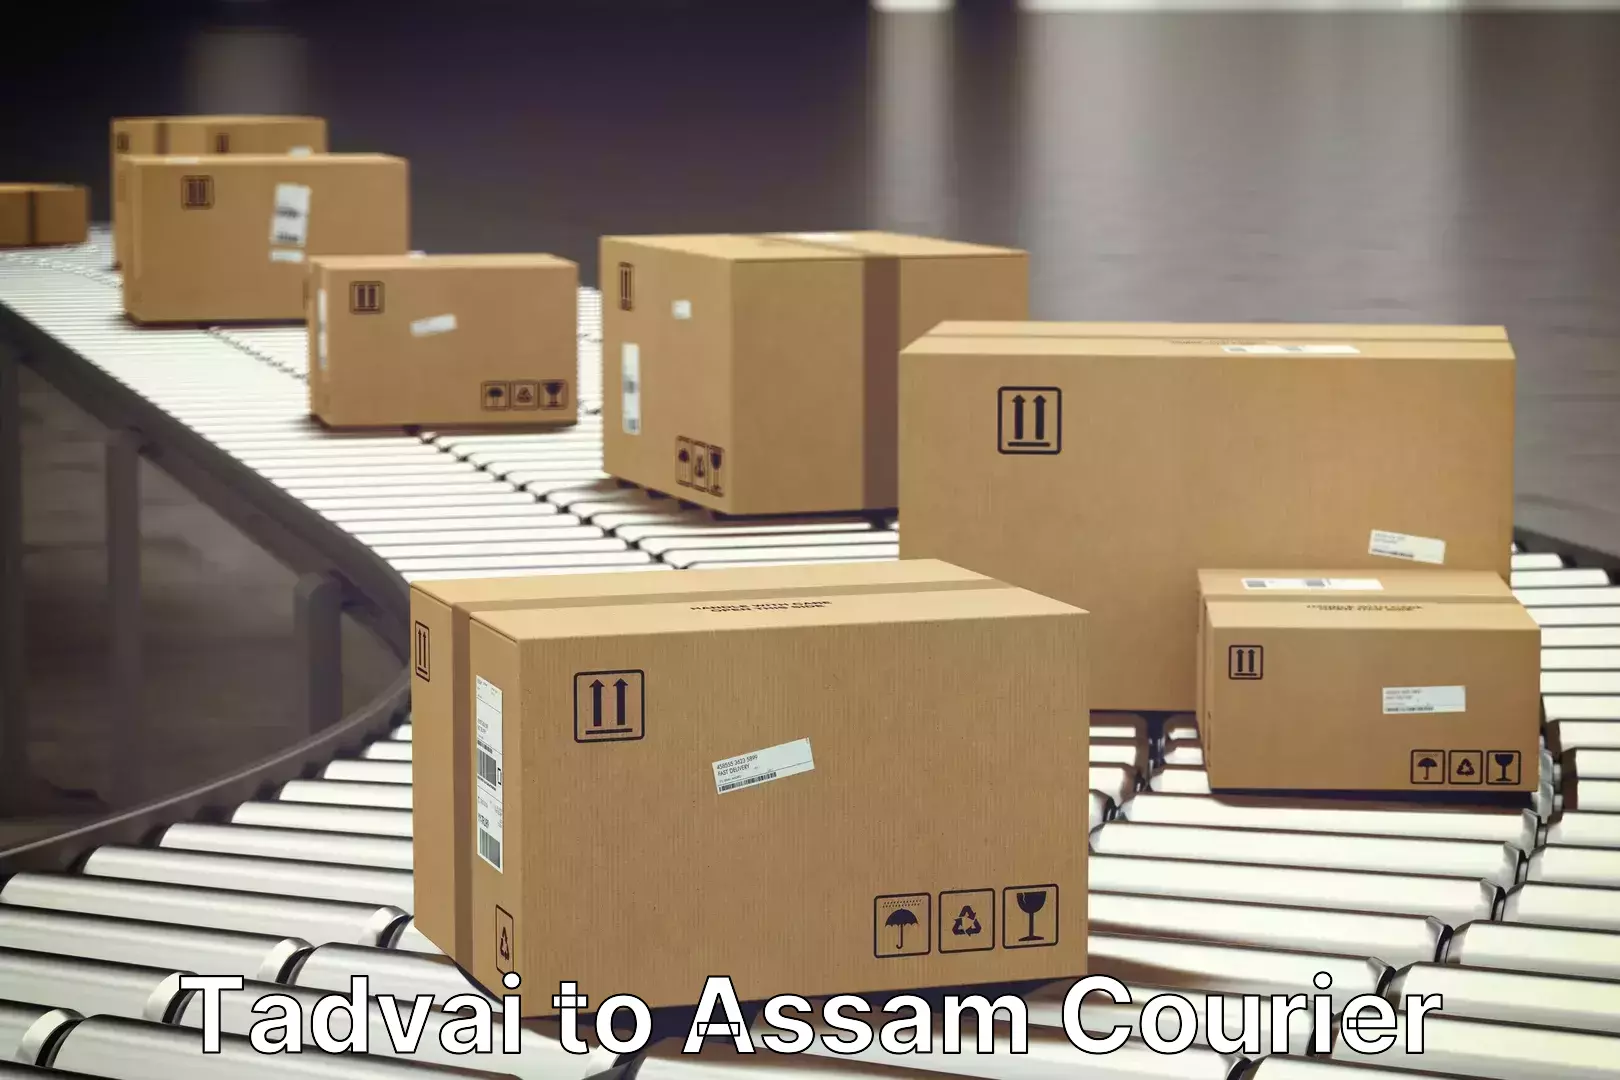 Professional moving company Tadvai to Assam